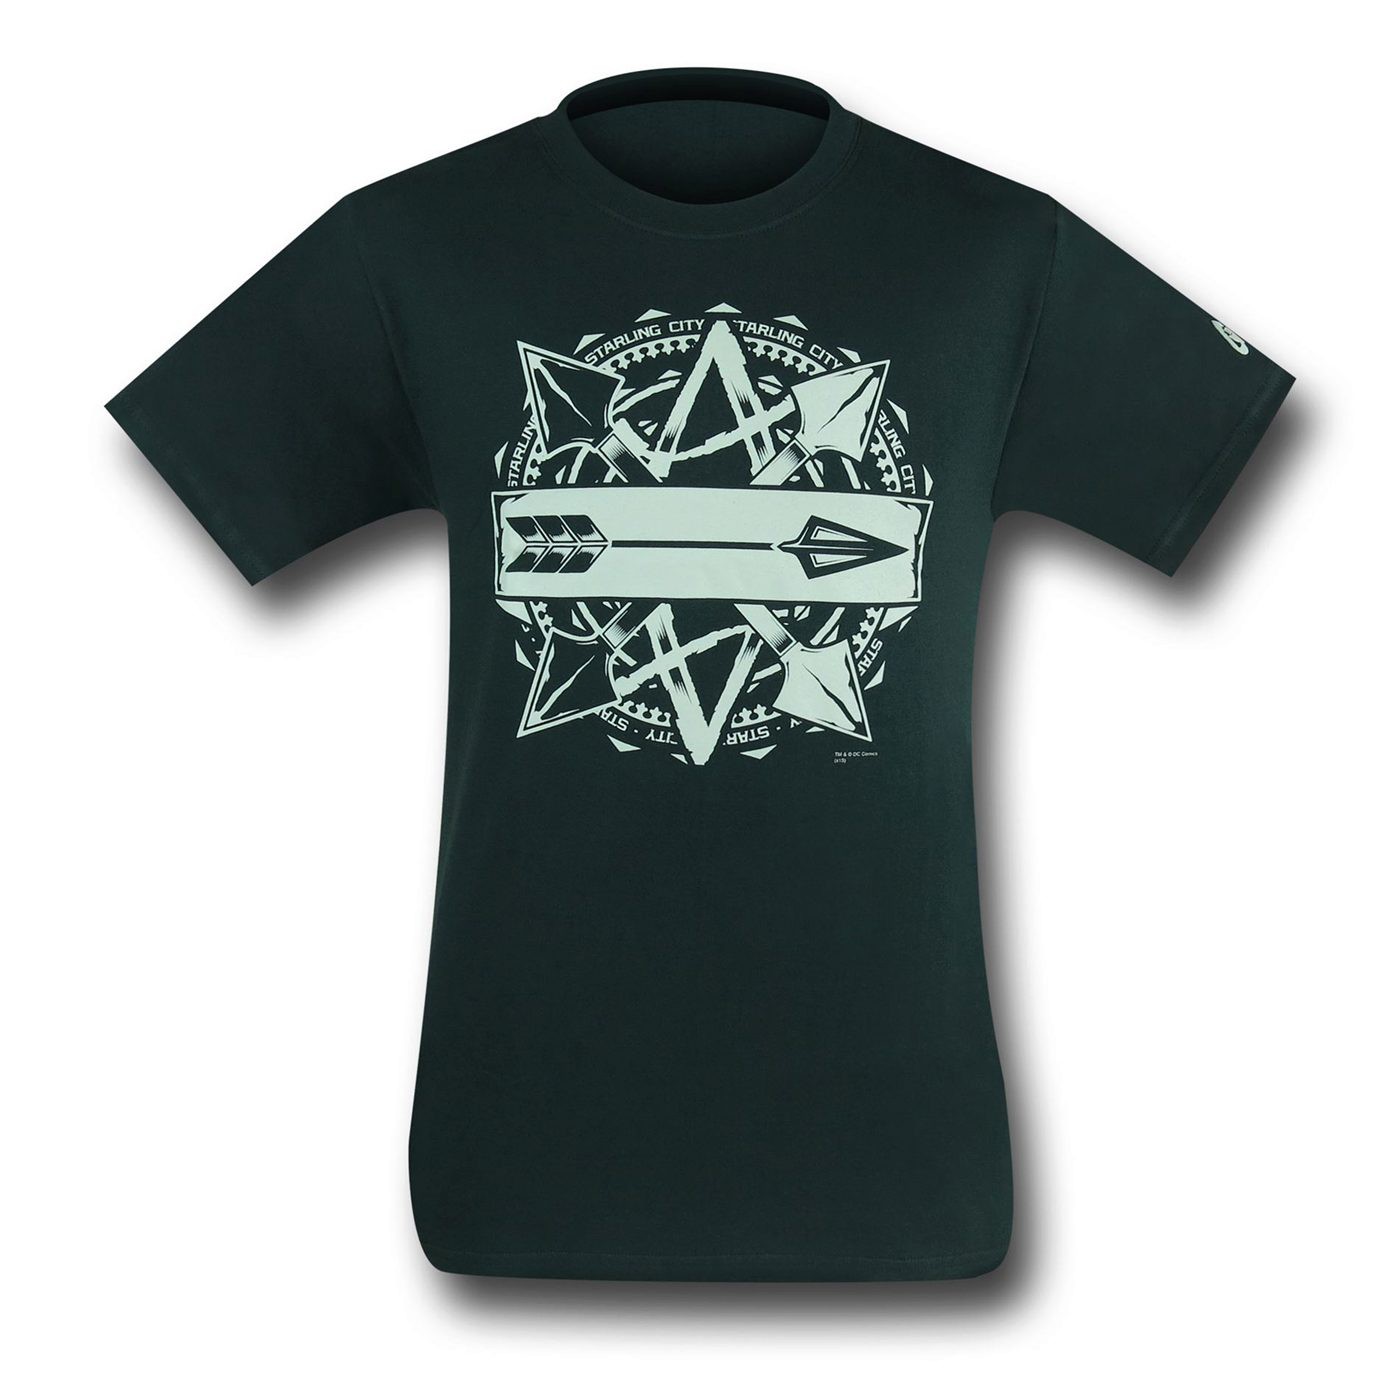 Arrow Starling City Symbol T-Shirt